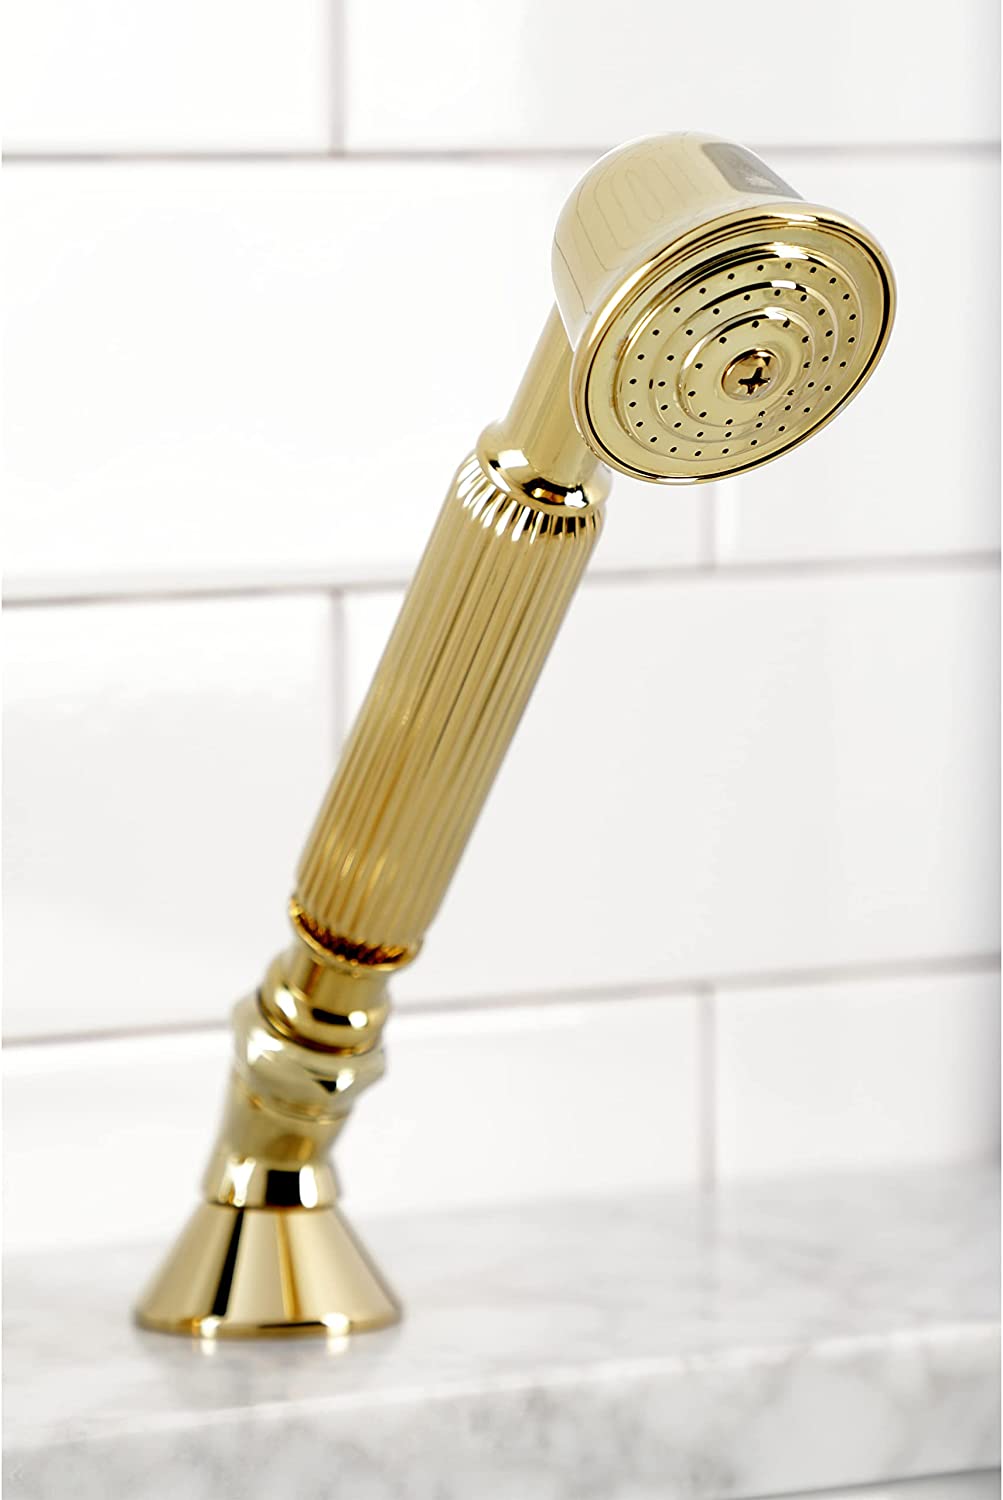 Kingston Brass KSK4302PLTR Deck Mount Hand Shower with Diverter for Roman Tub Faucet, Polished Brass